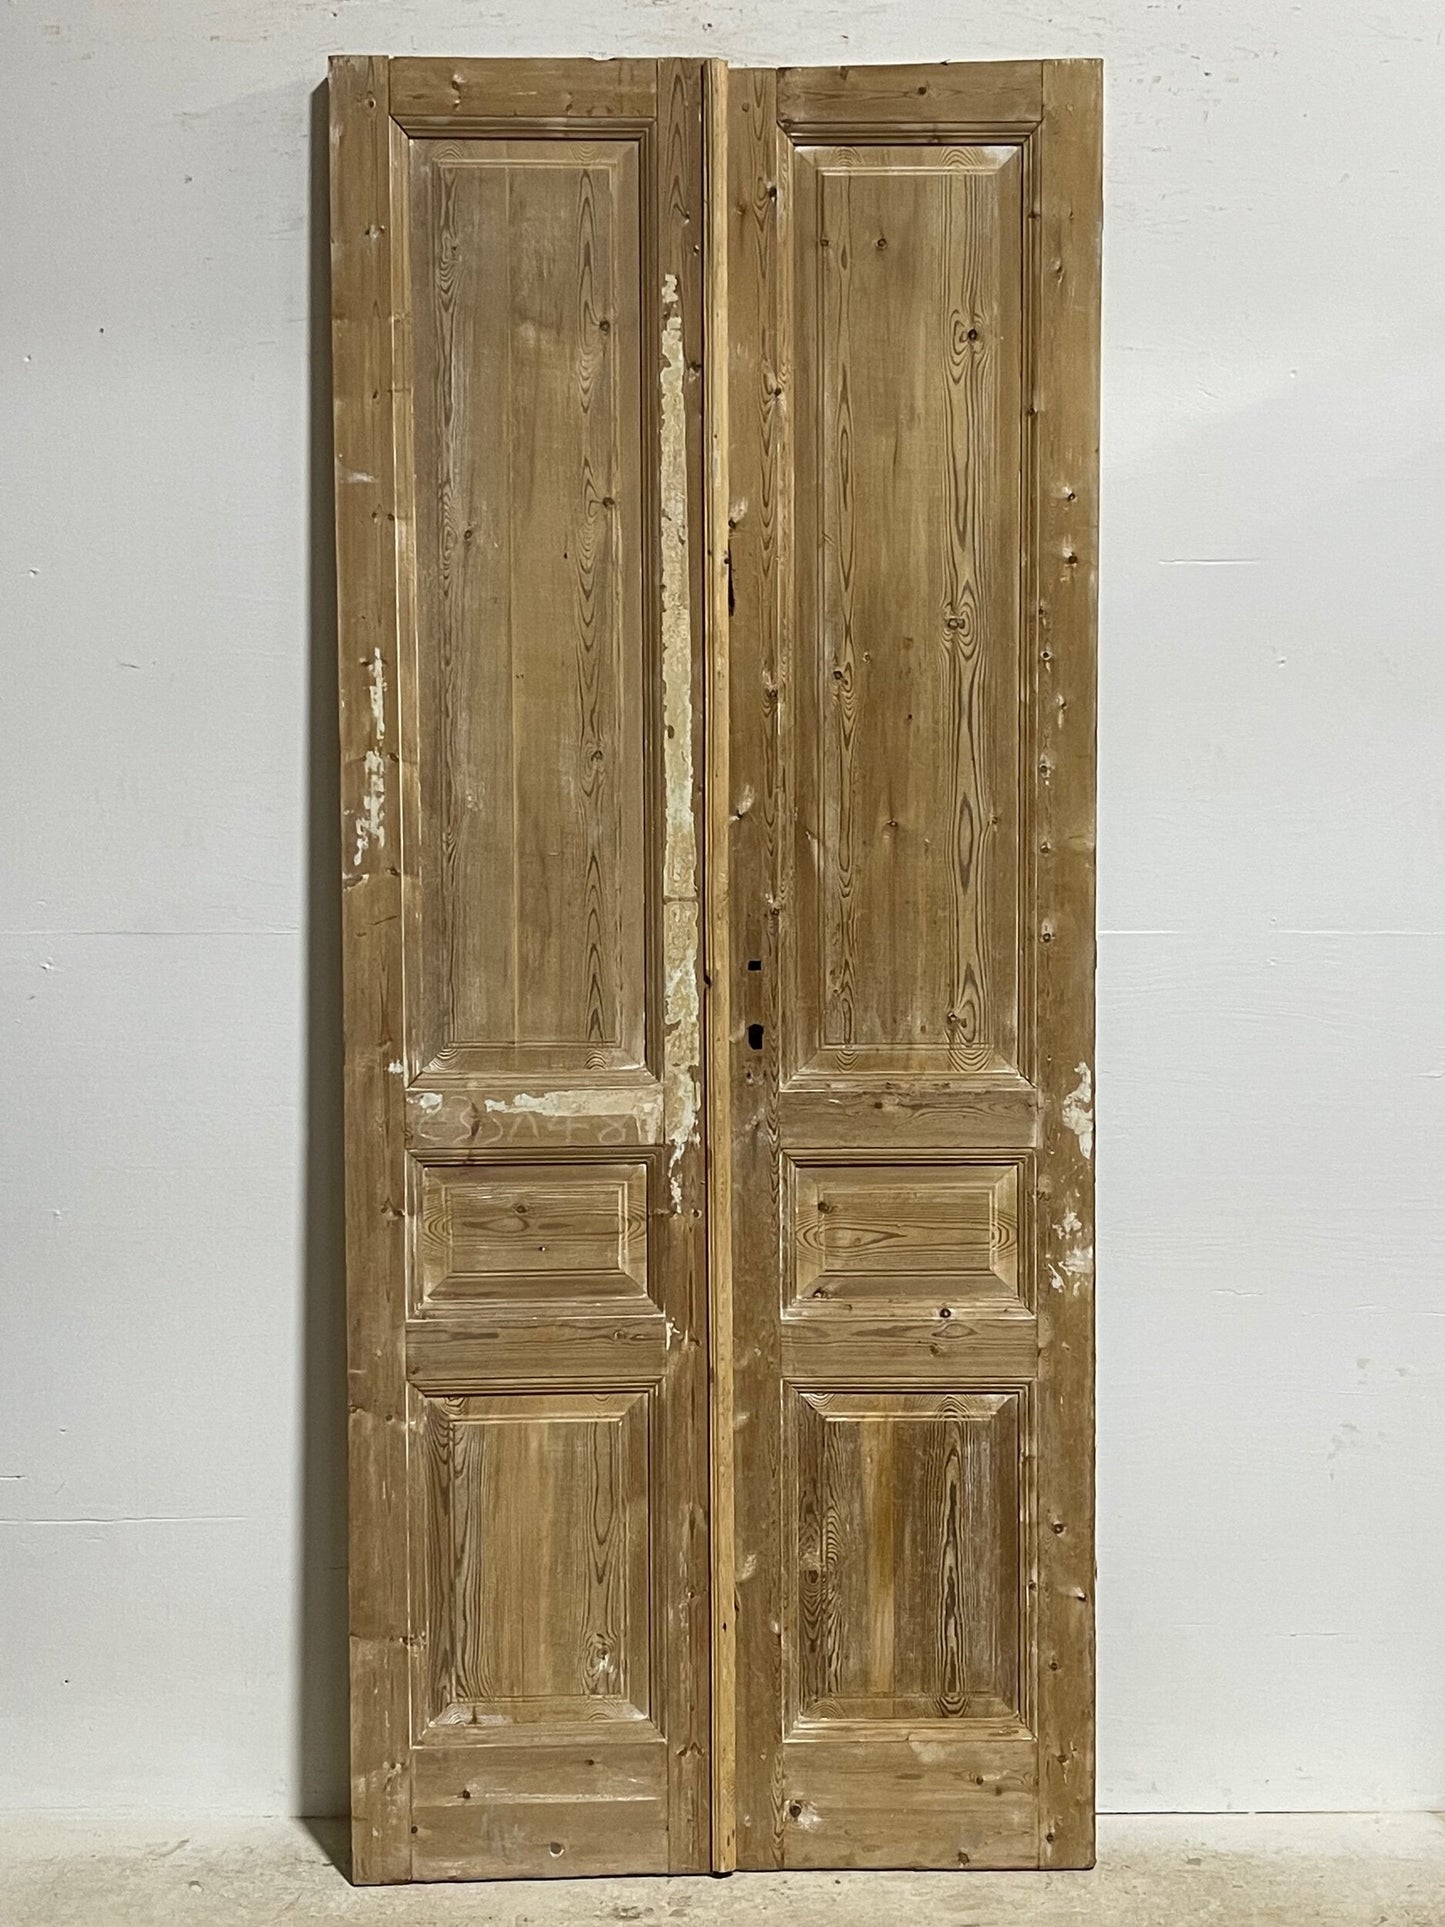 Antique French doors (91.5x38.25) H0201s